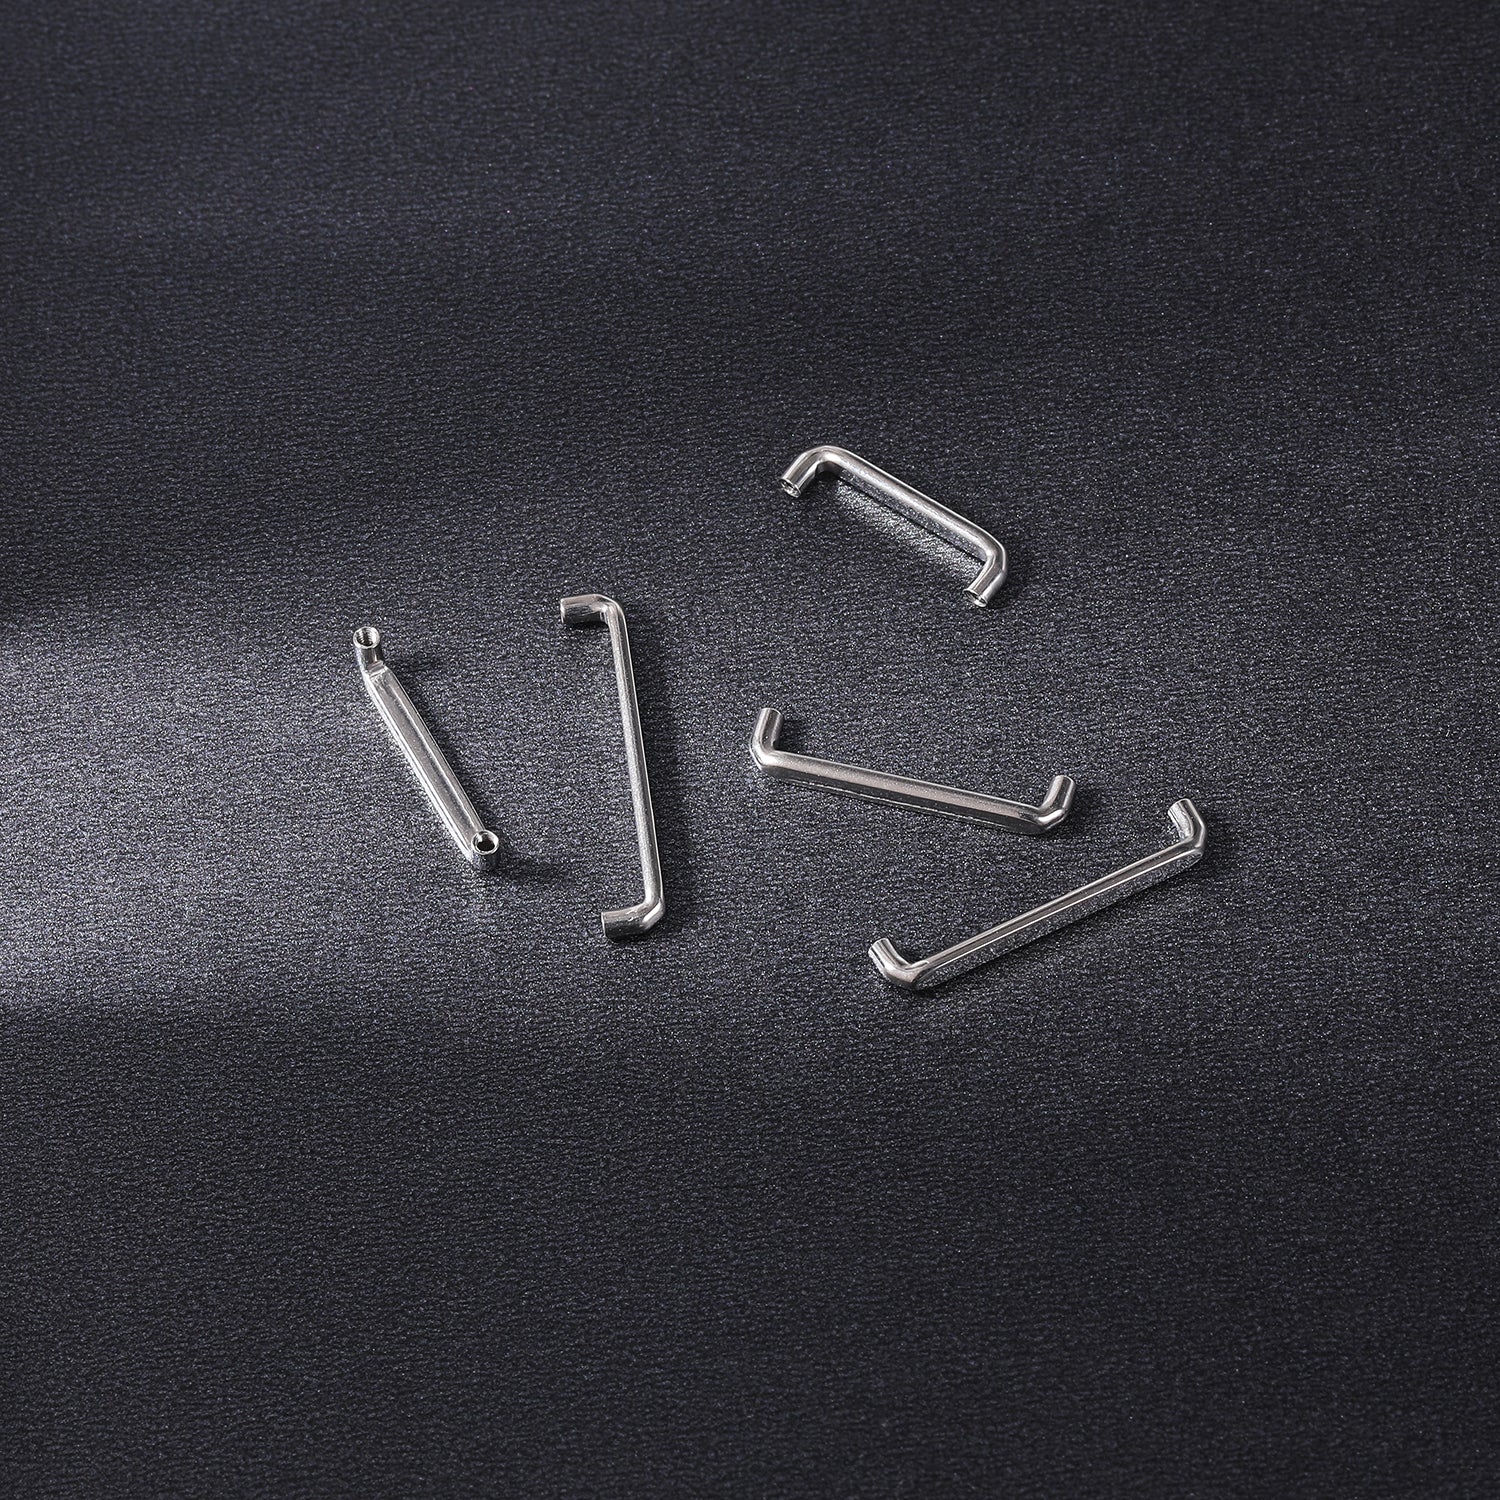 g23-titanium-dermal-anchor-base-internally-threaded-skin-piercing-kit